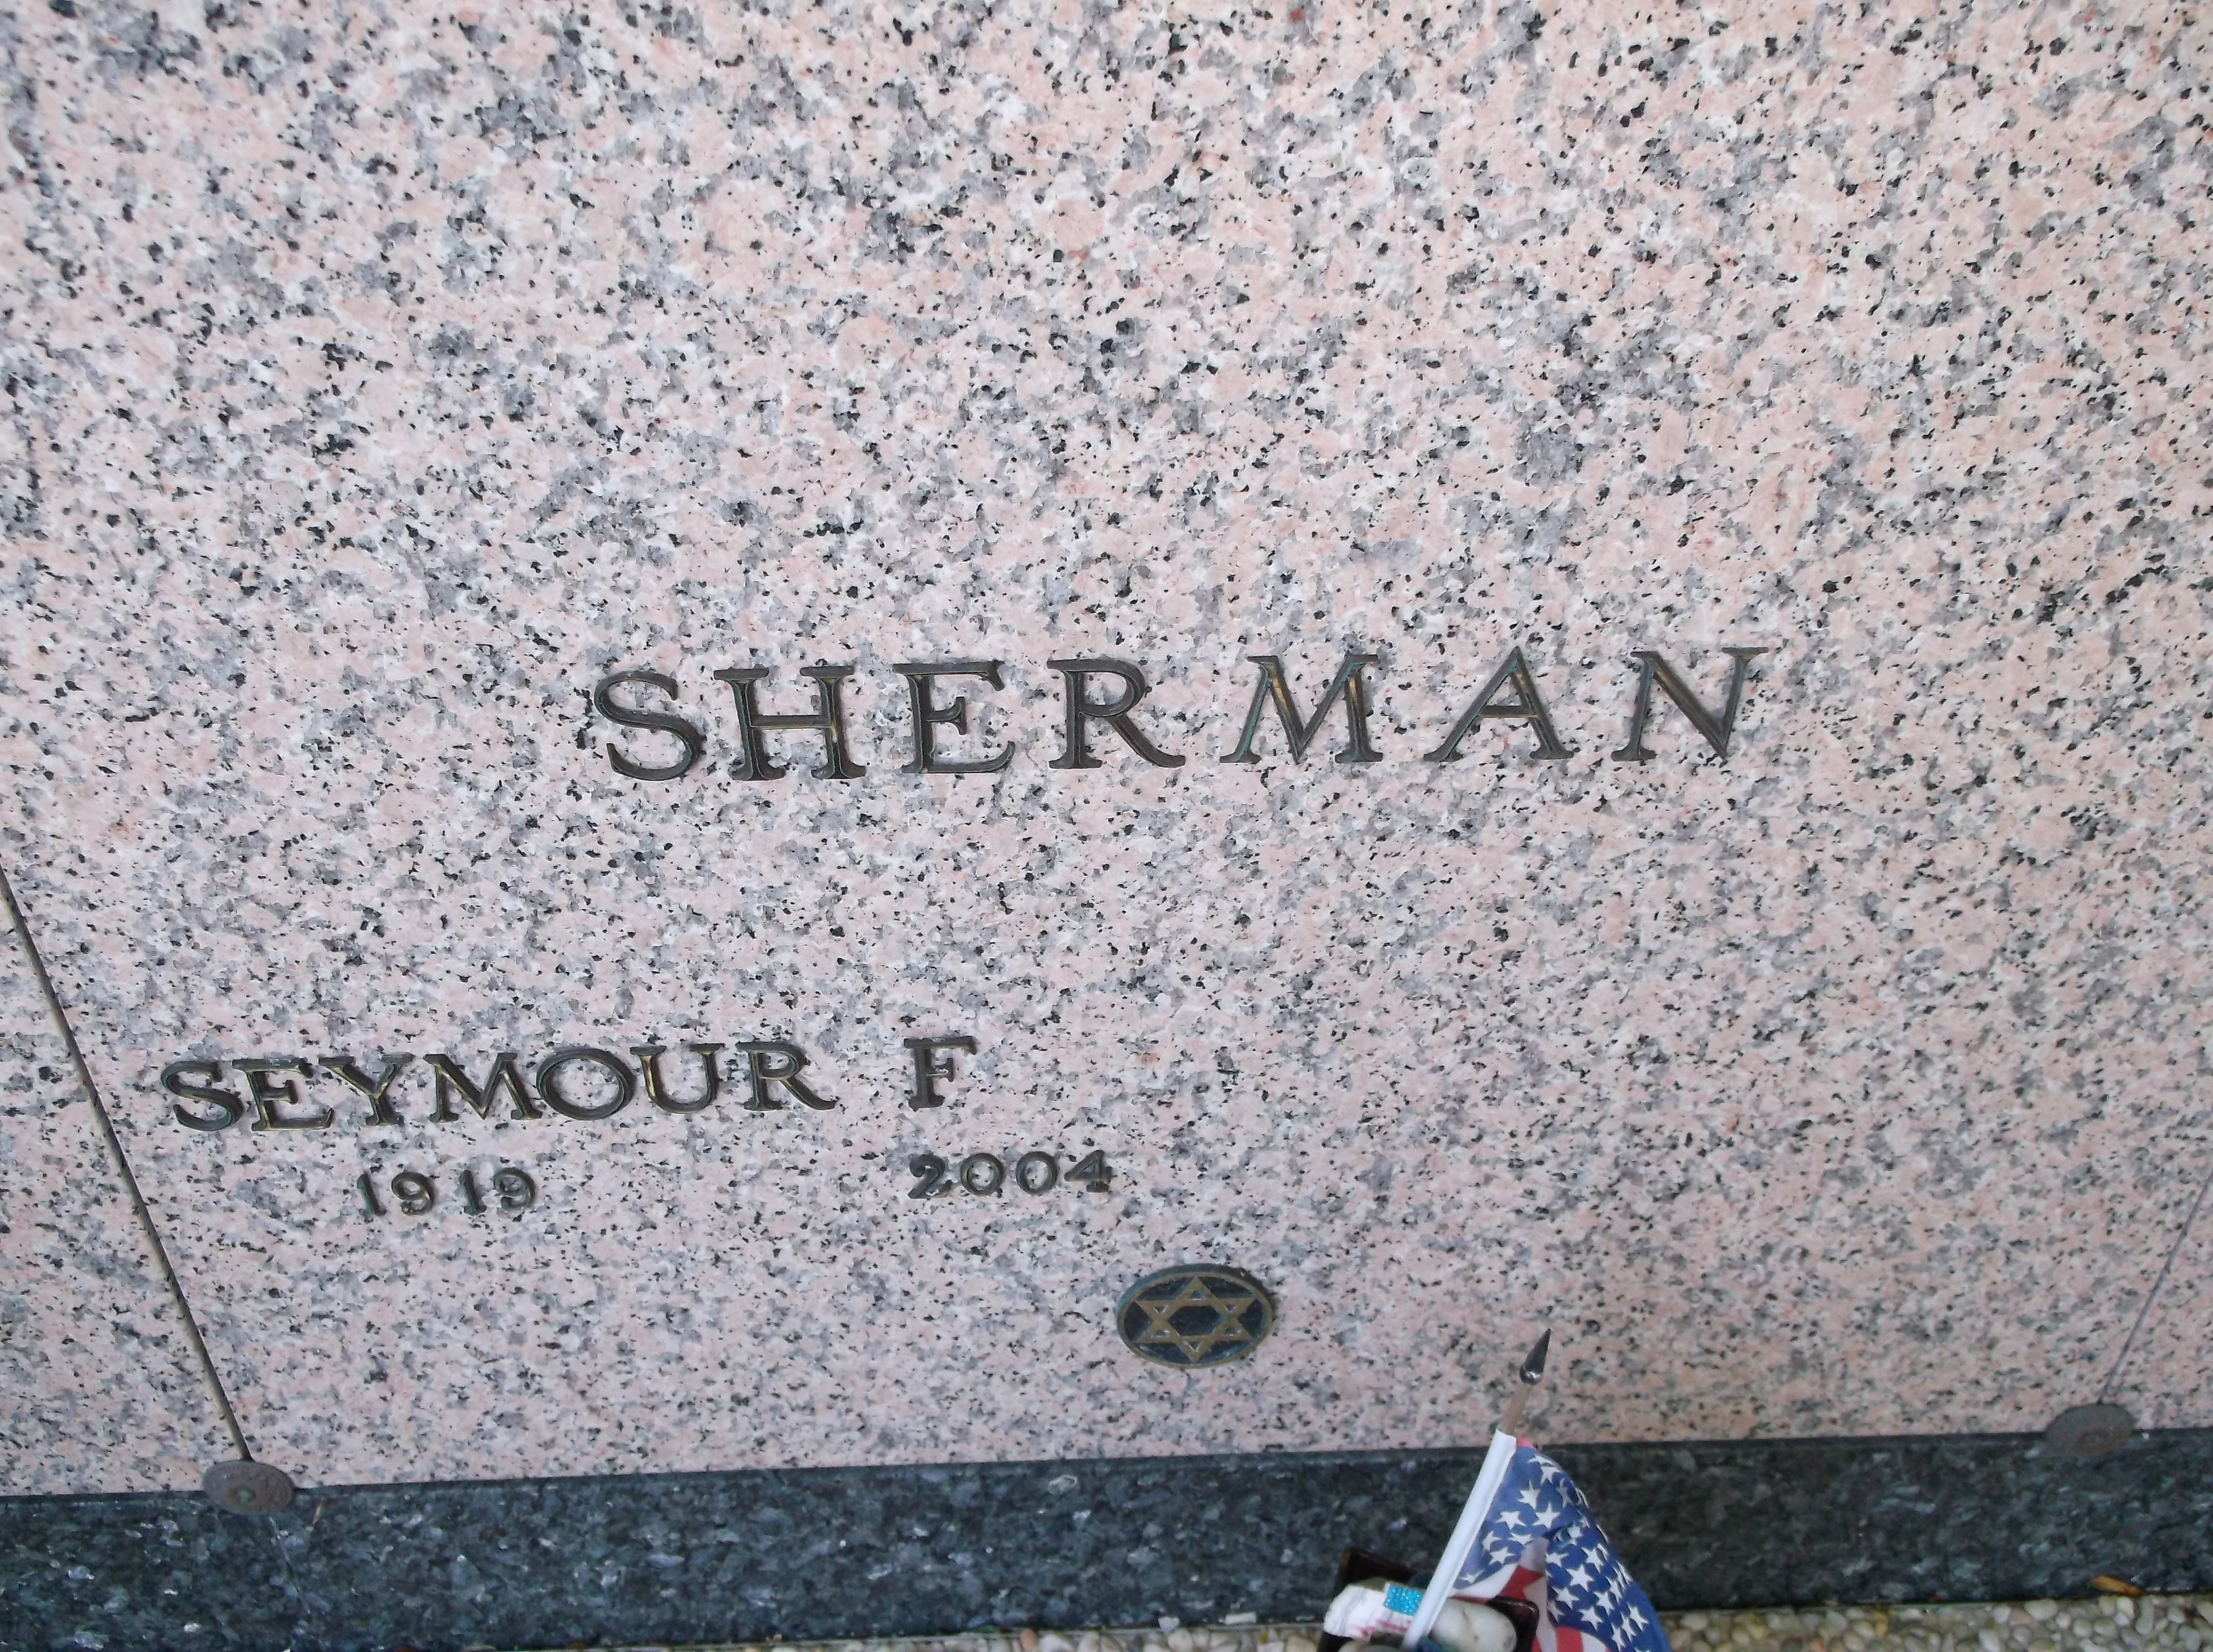 Seymour F Sherman